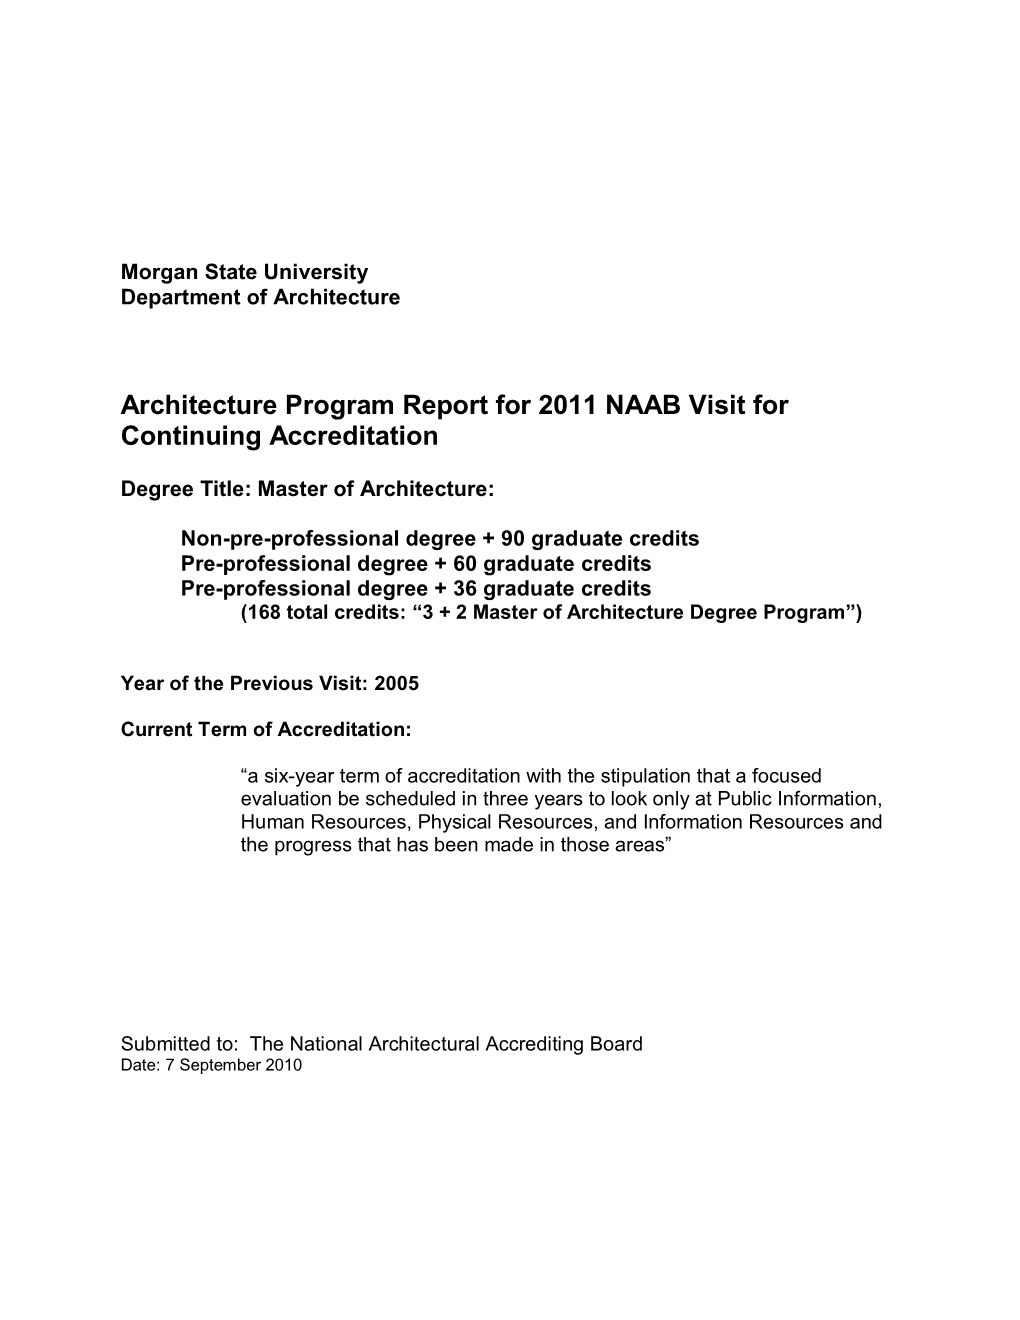 2011 NAAB Architecture Program Report